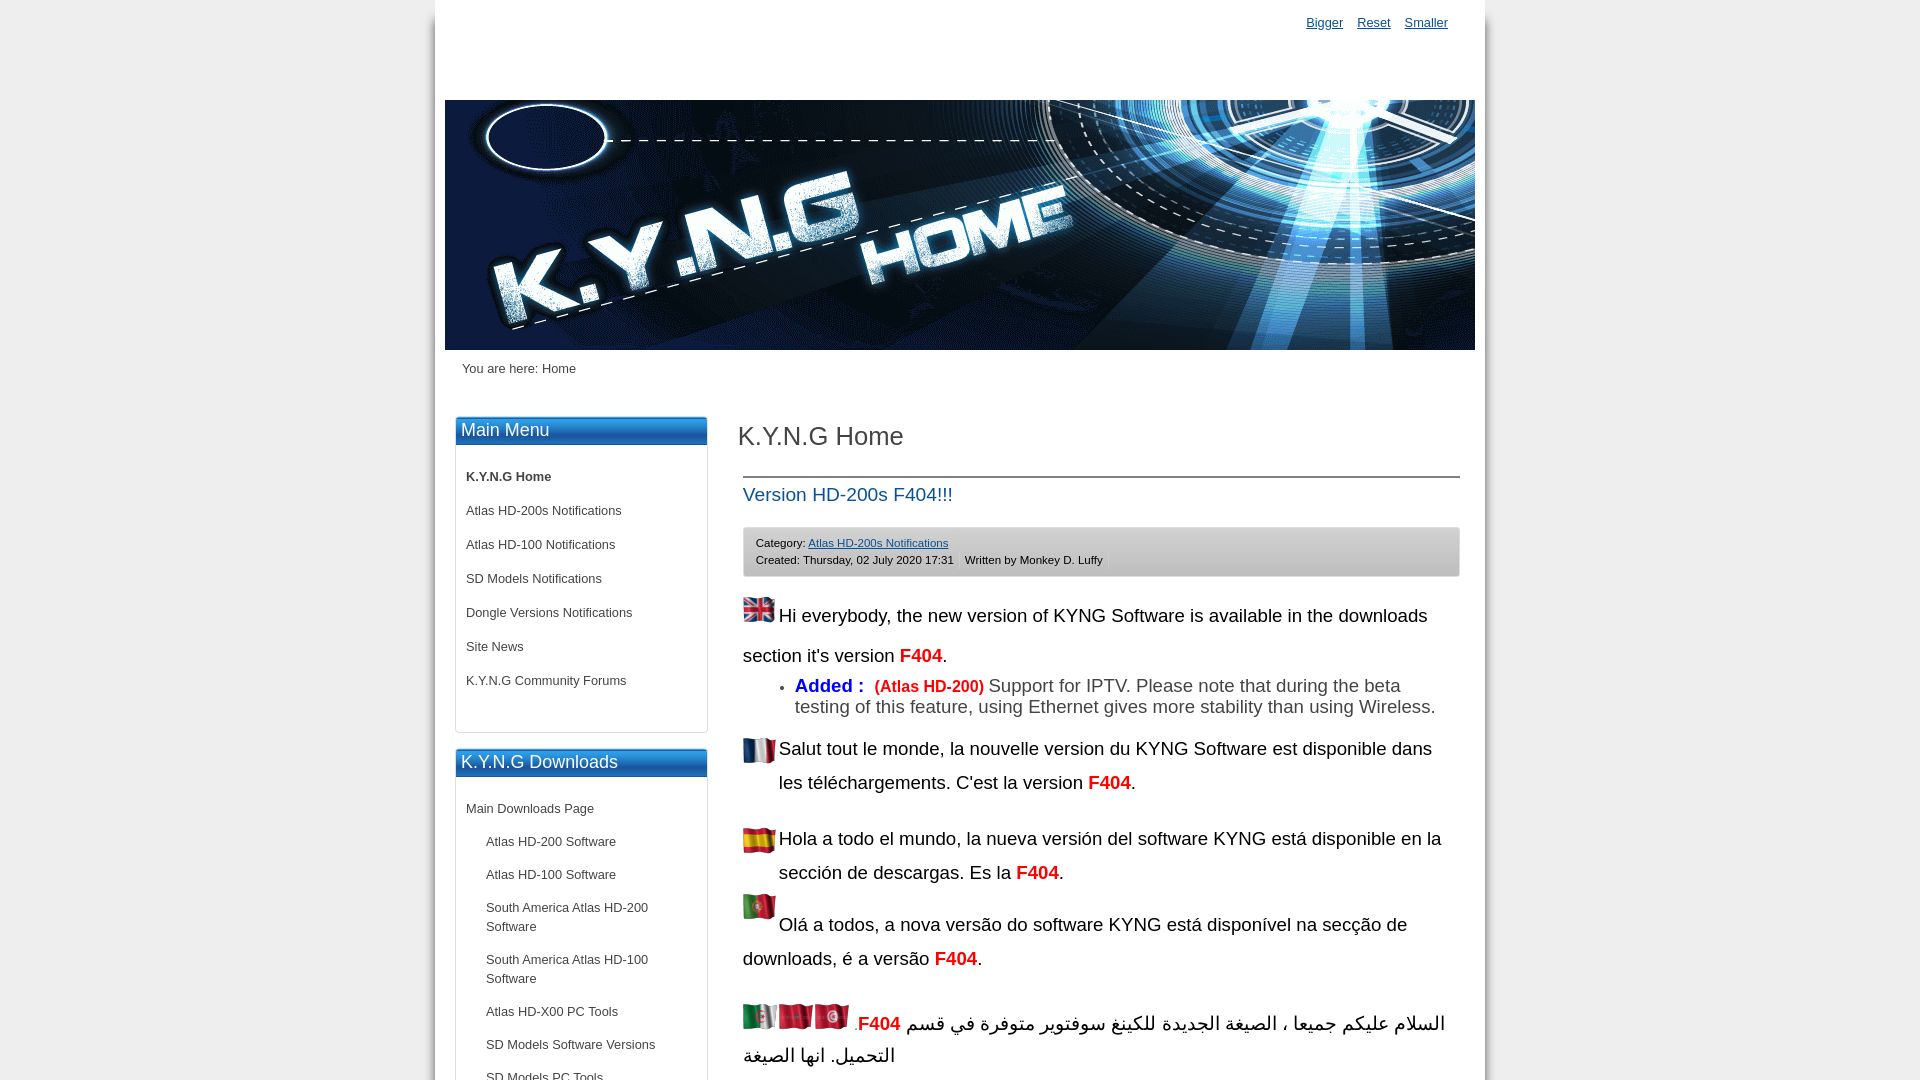 вебсайт home.kyngdvb.com Є   ONLINE